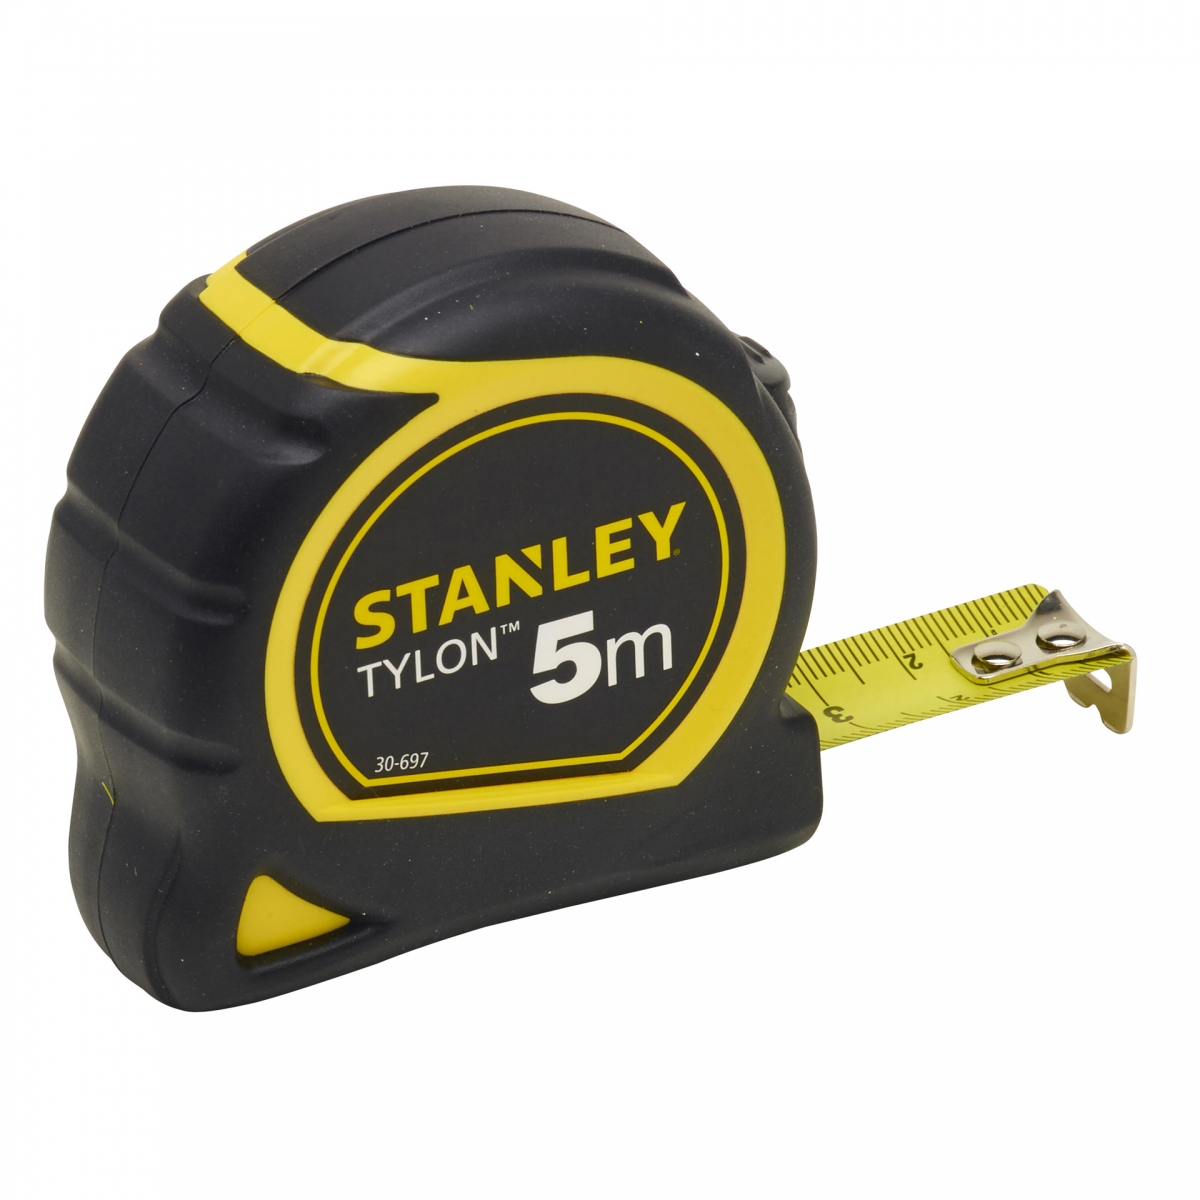 Stanley - 0-30-697 Metro de Banda Tylon ™ 5M X 19MM 30-697 Cinta Métrica